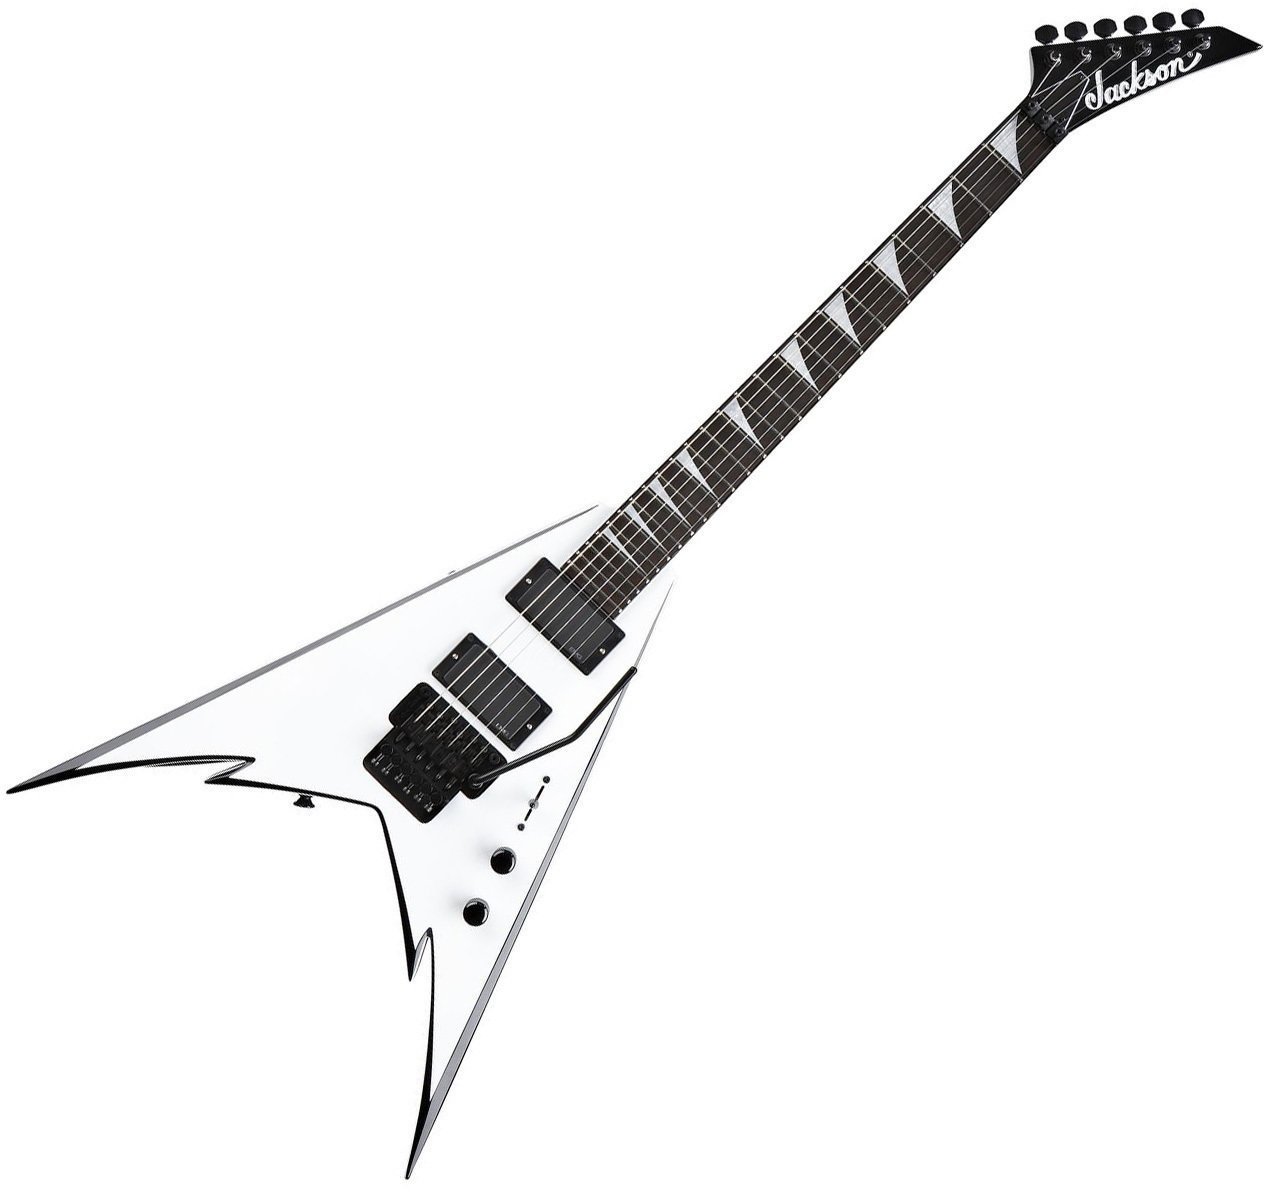 Signatur elektrisk guitar Jackson Demmelition Pro Series White with Black Bevels